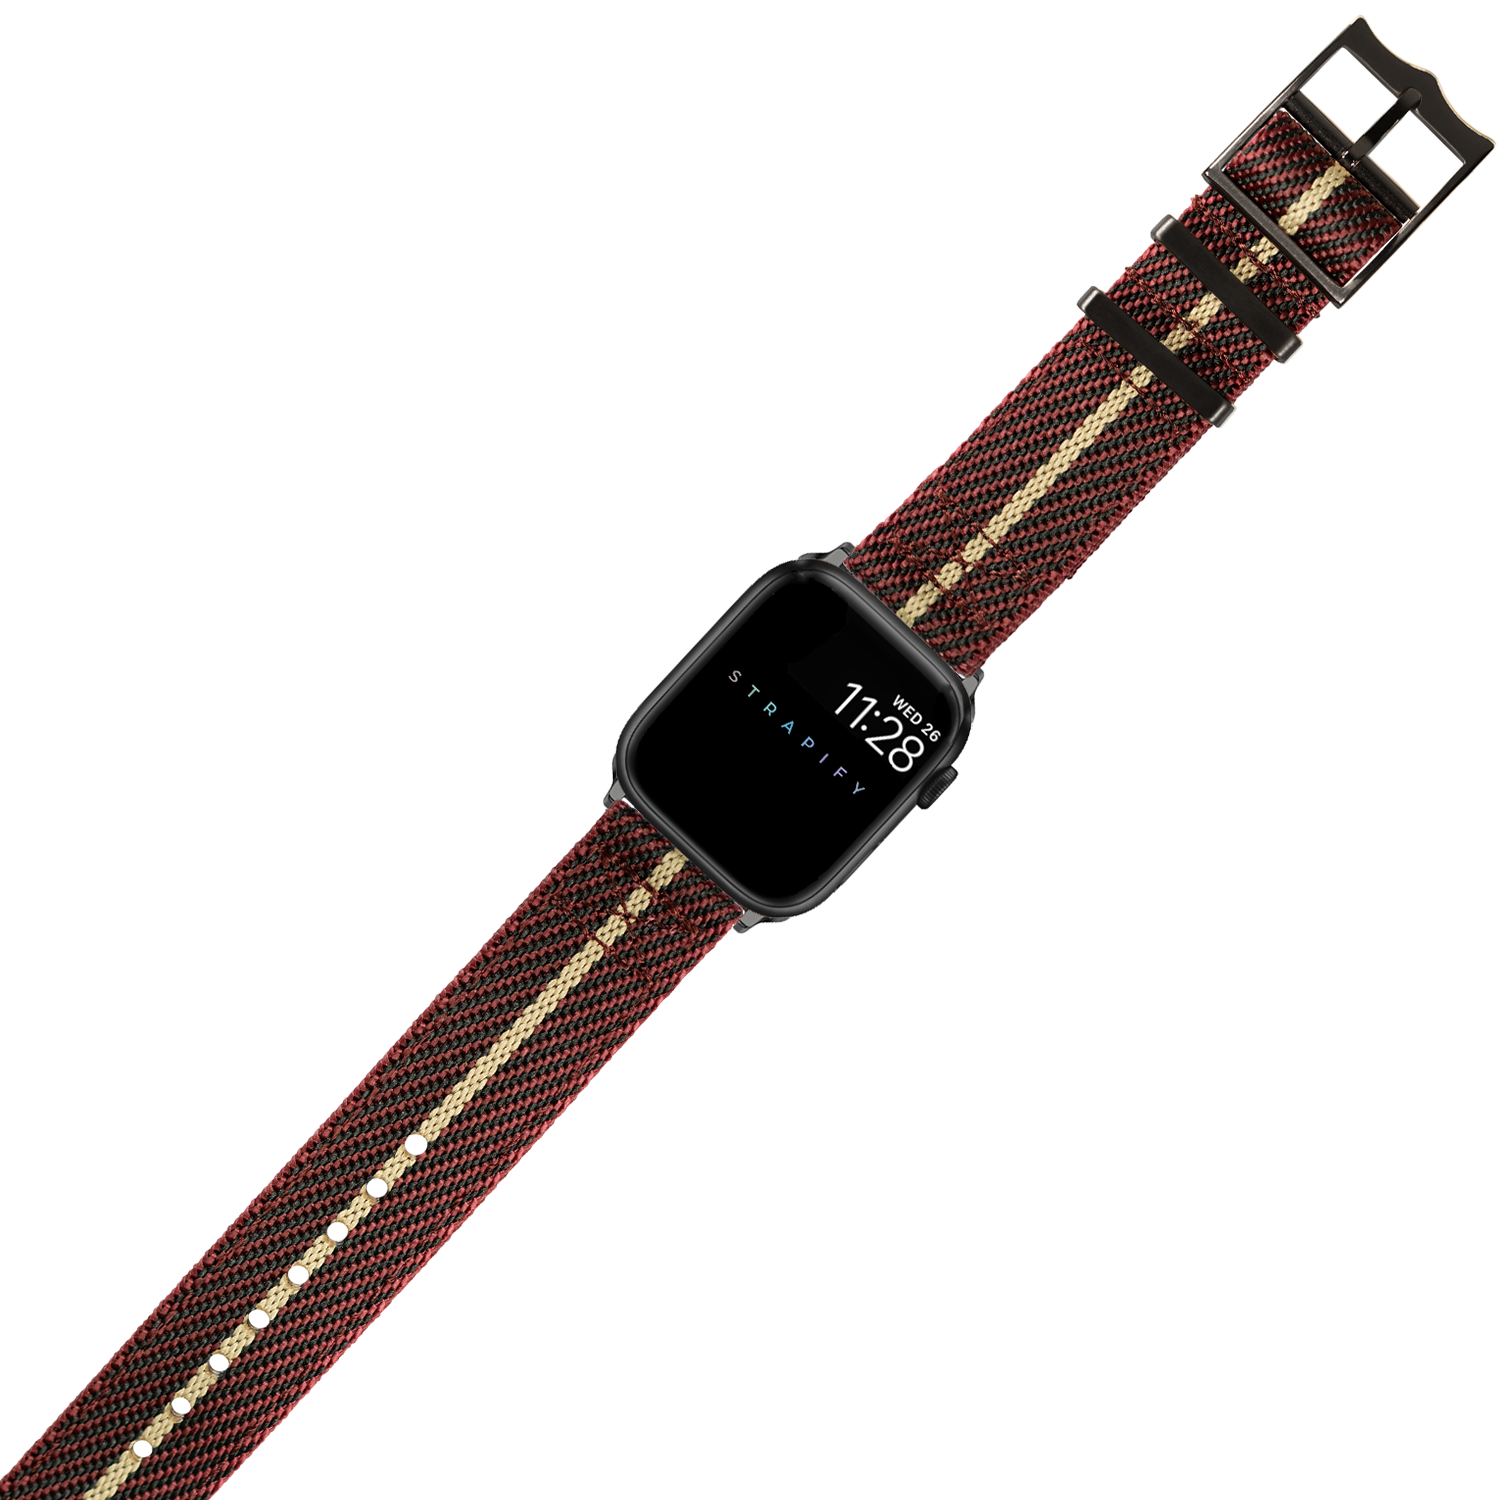 [Apple Watch] Cross Militex - Wine Red / Wheat [Black Hardware]